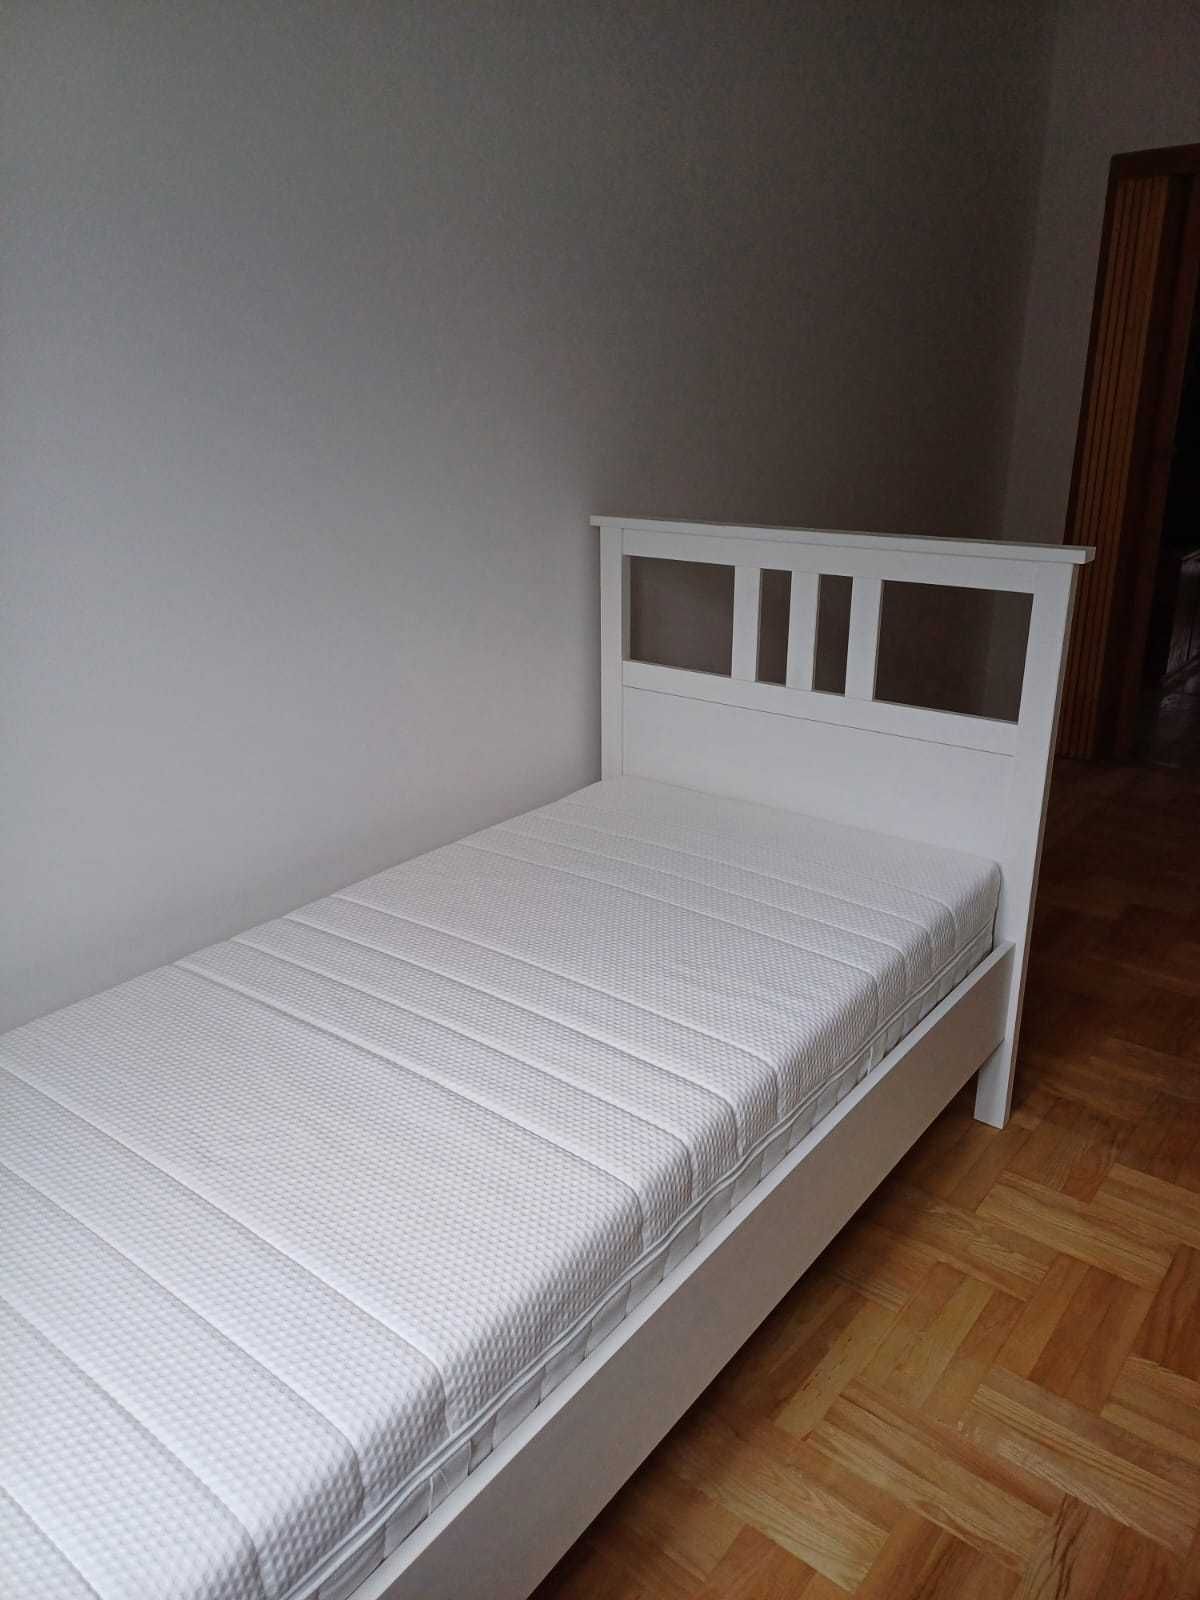 łóżko HEMNES z materacem i żeberkami